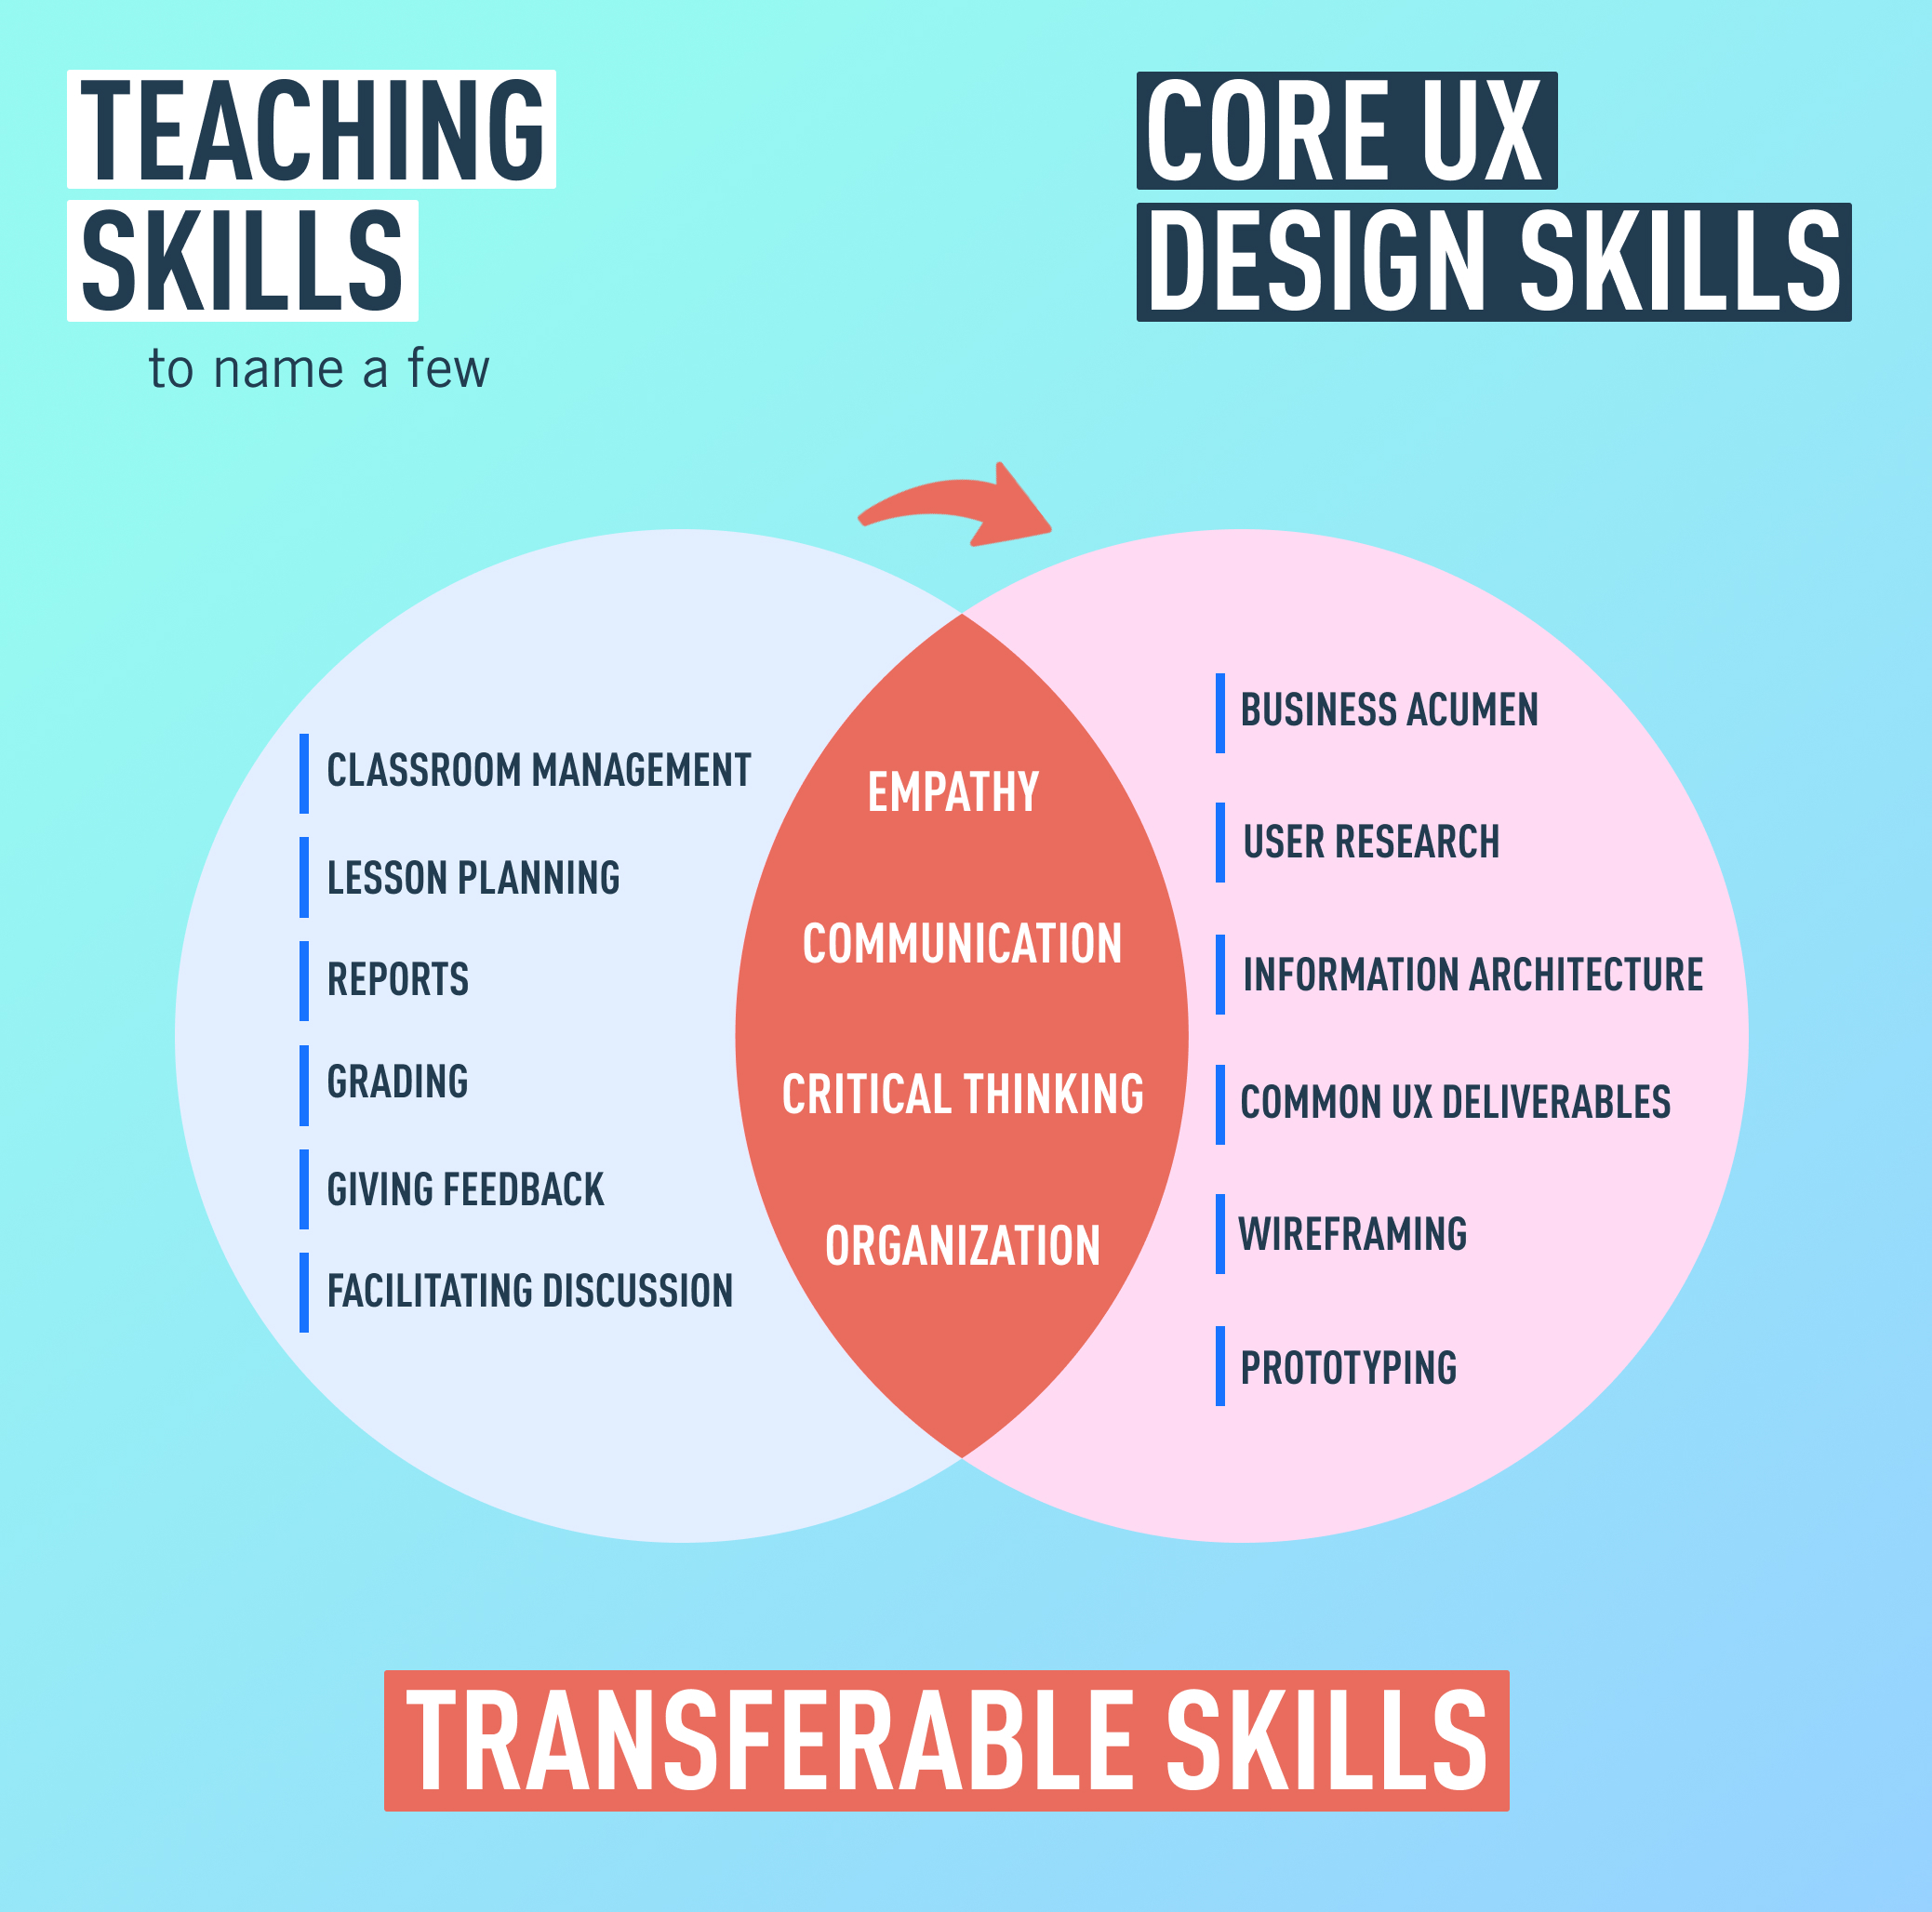 A Venn diagram illustrating common teaching skills, core UX design skills, and the overlap